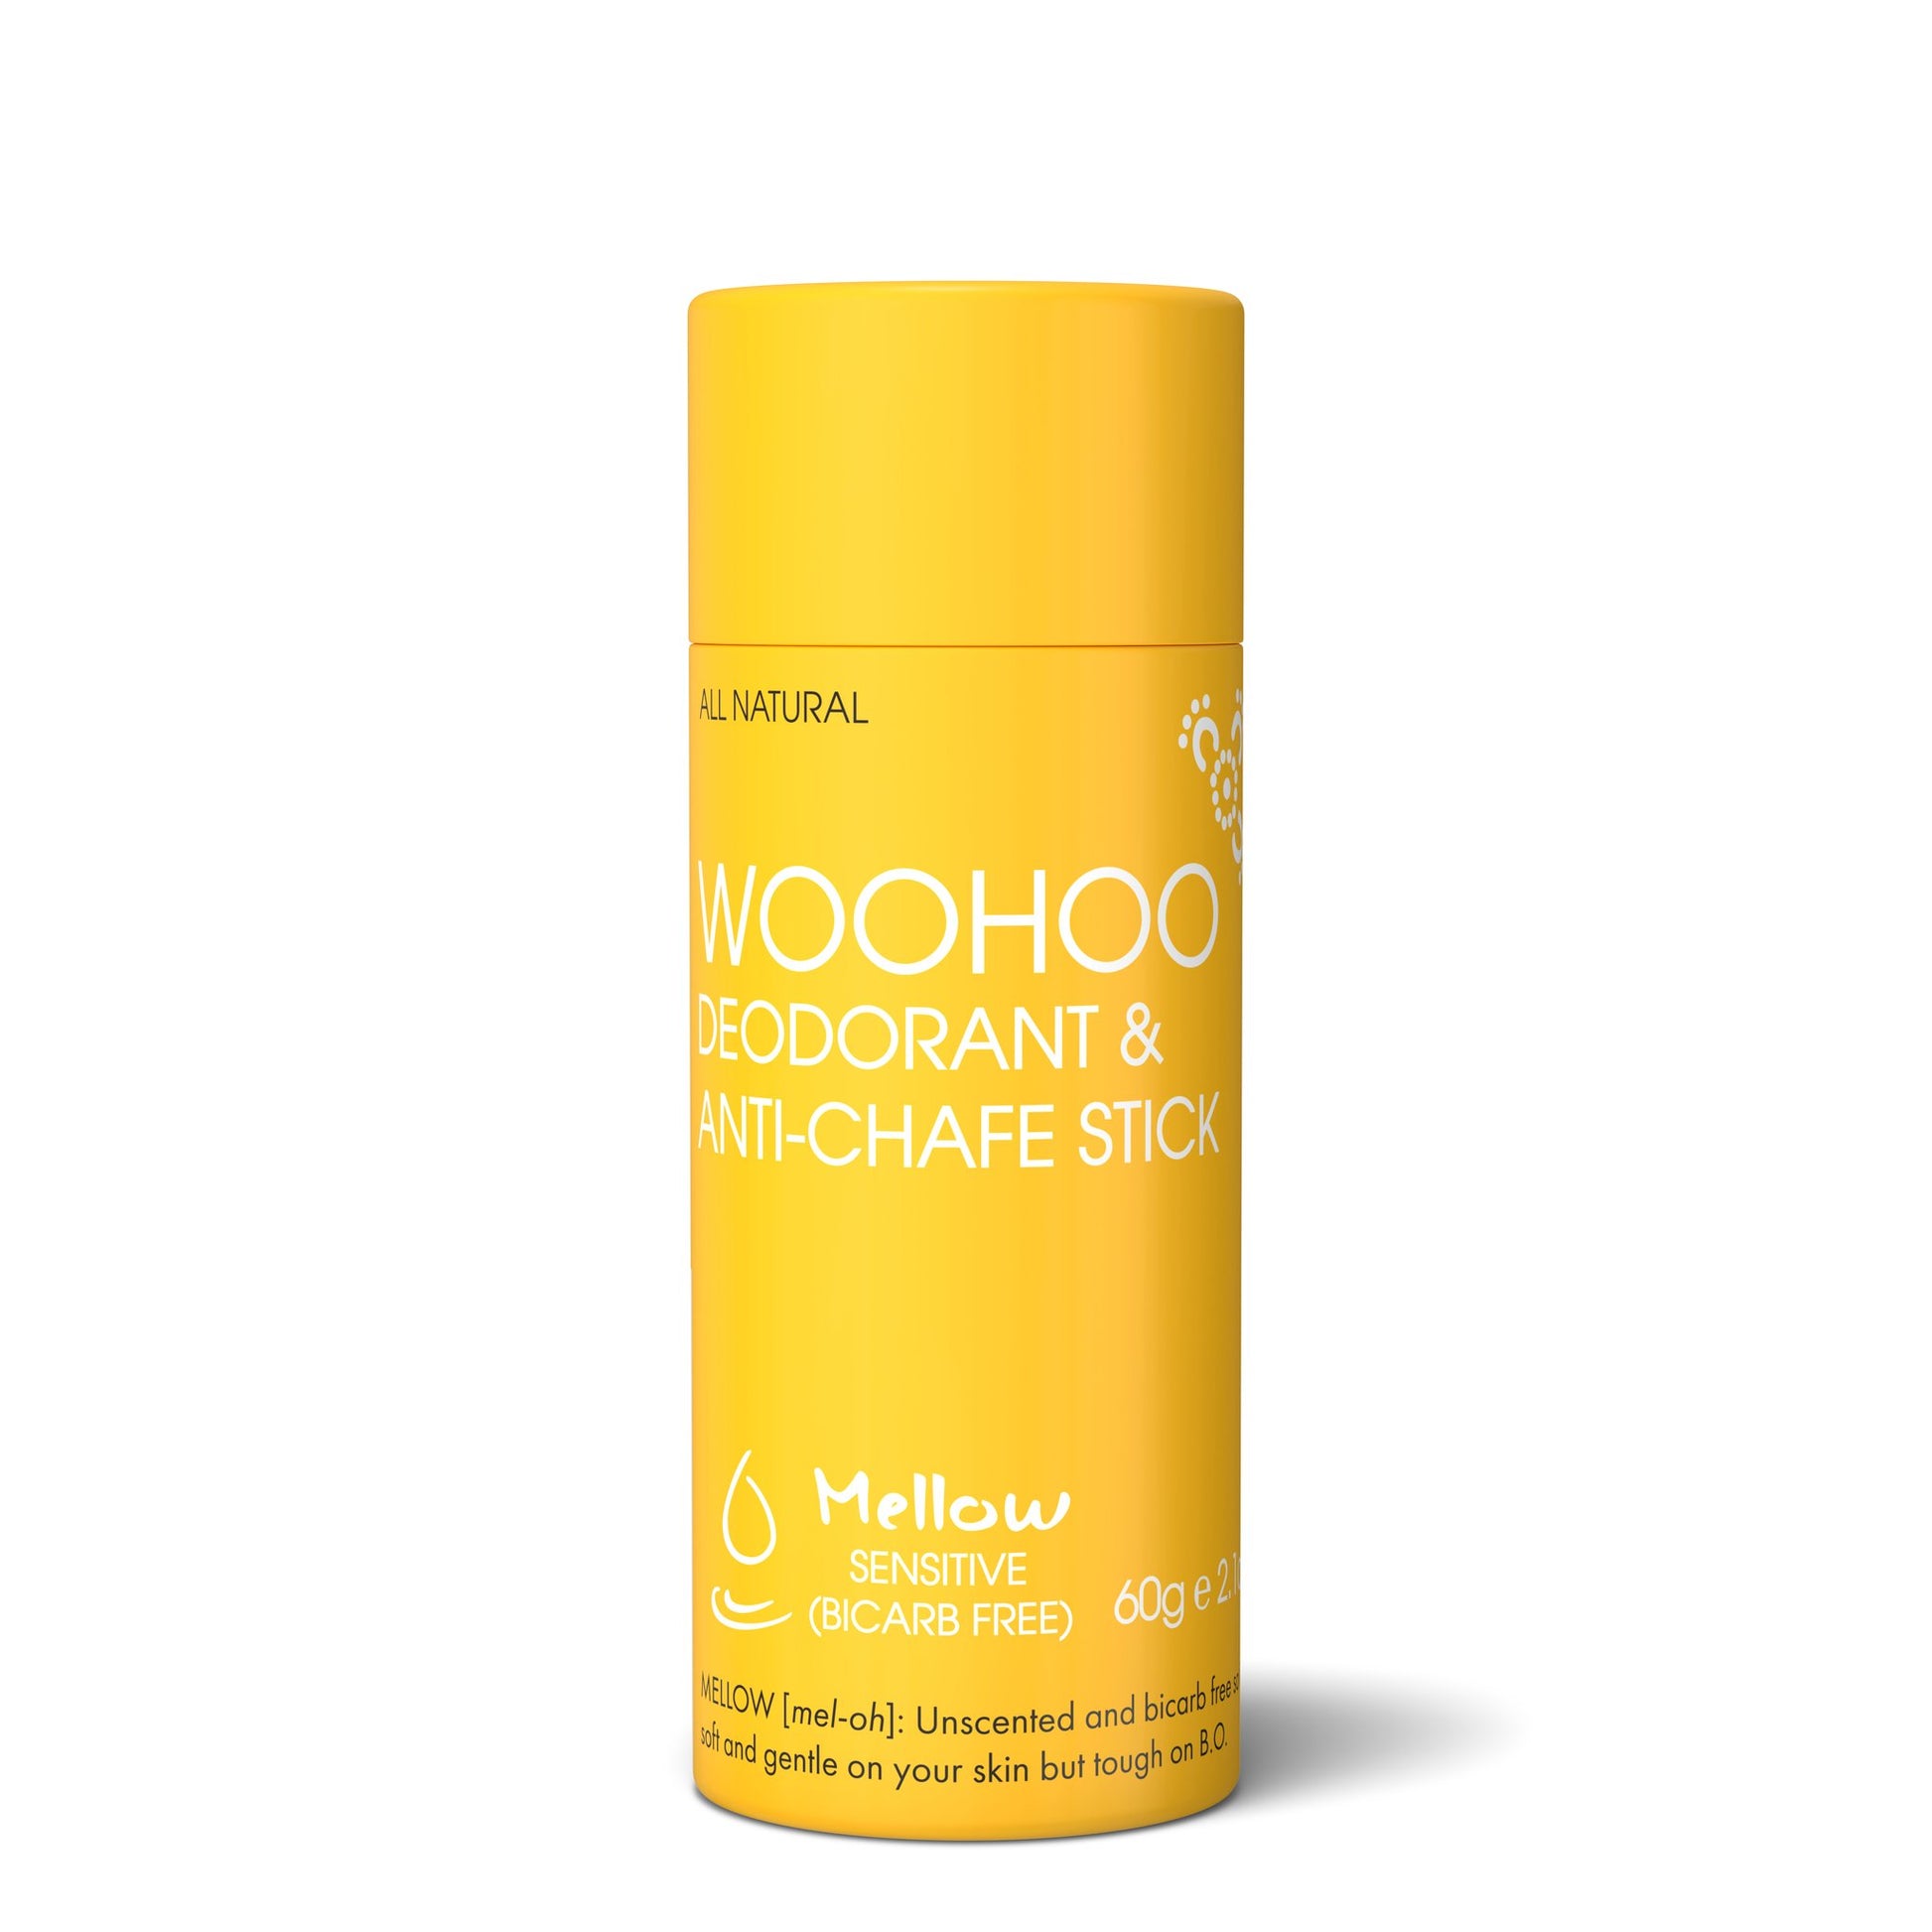 Woohoo Body Deodorant & Anti-Chafe Stick - Mellow